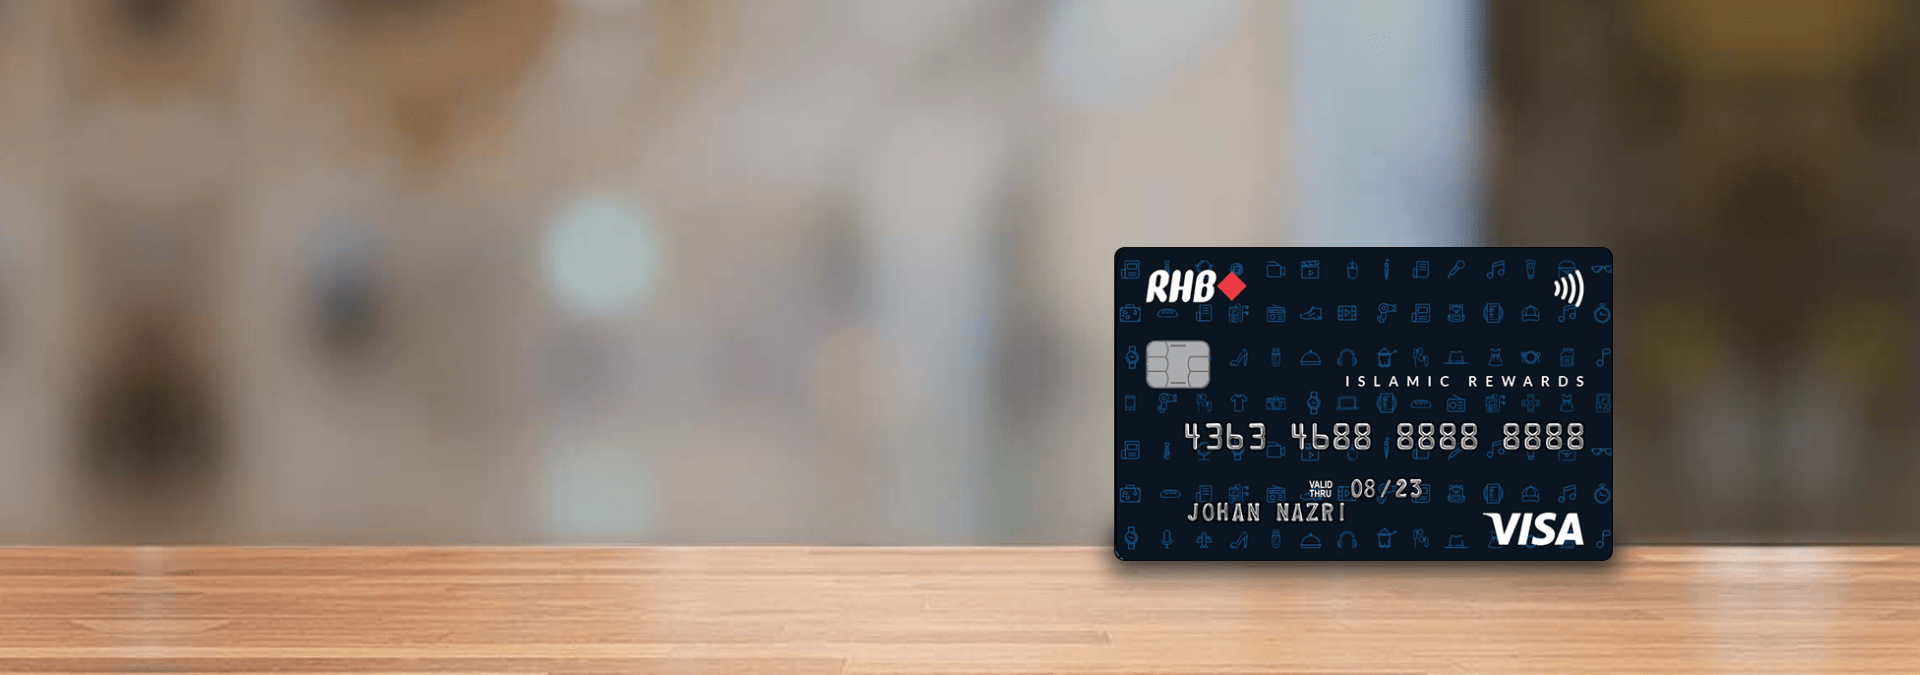 rhb-visa-rewards-credit-card-banner